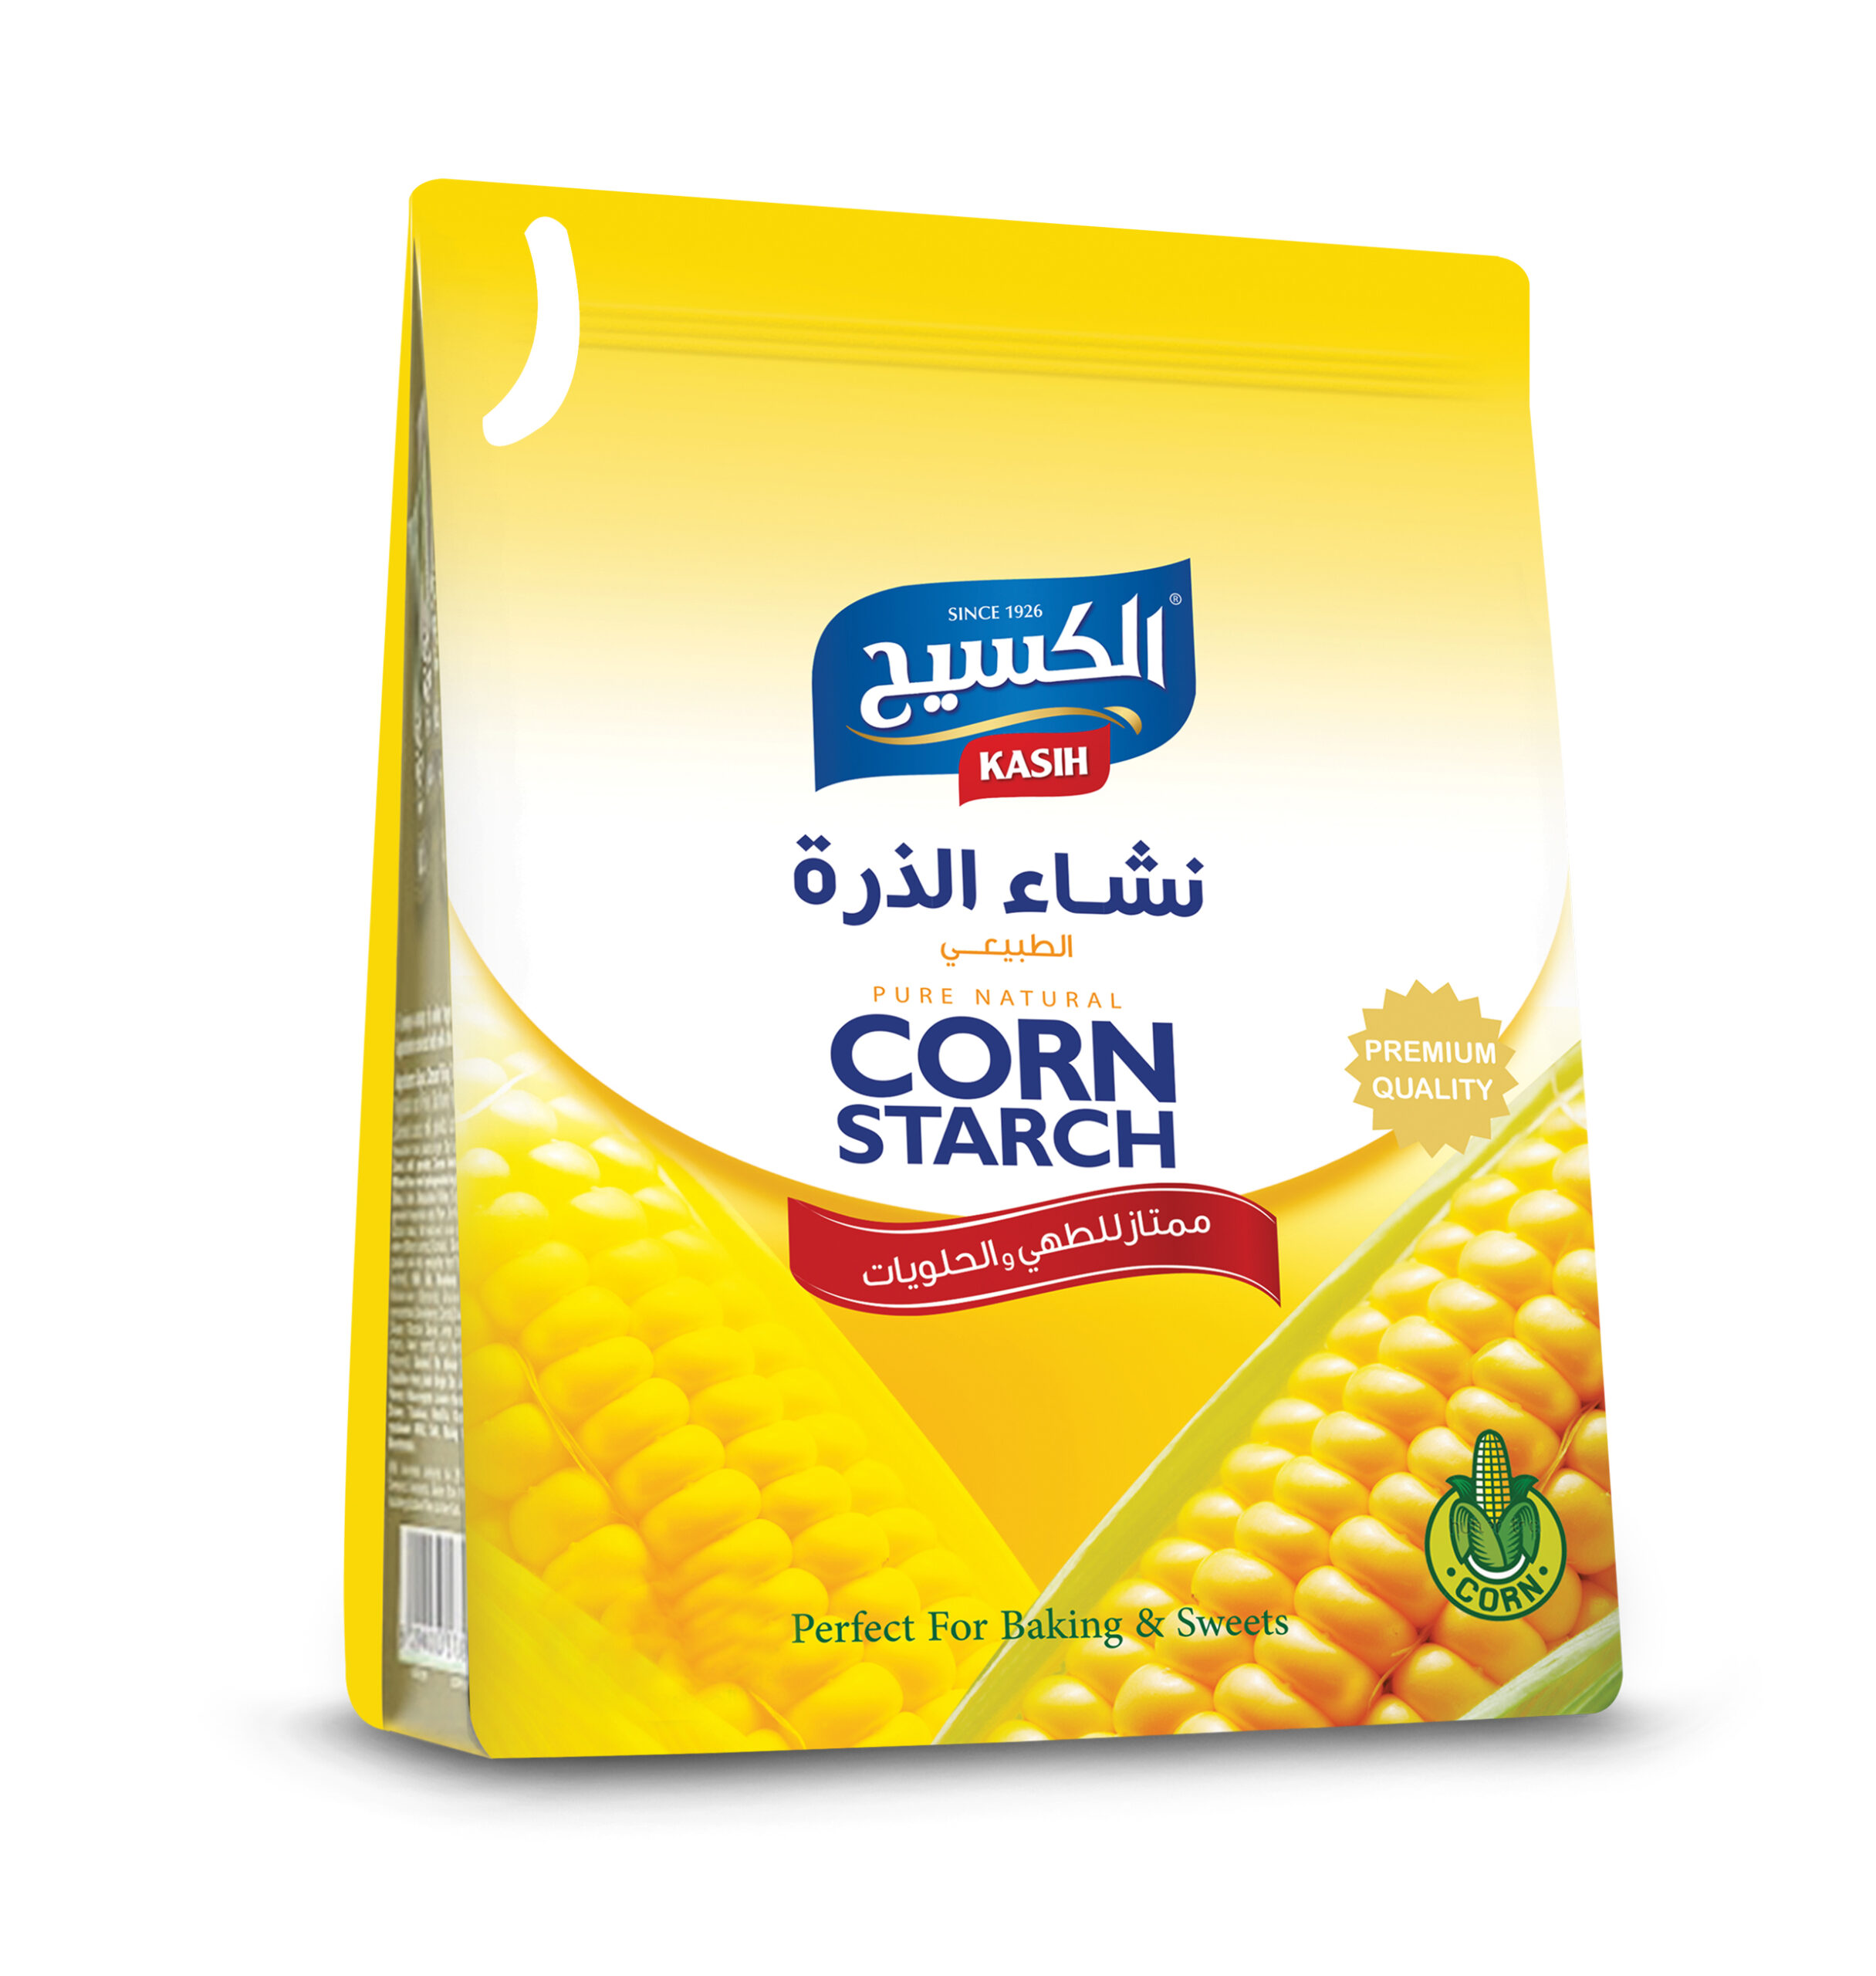 Kasih Corn Starch